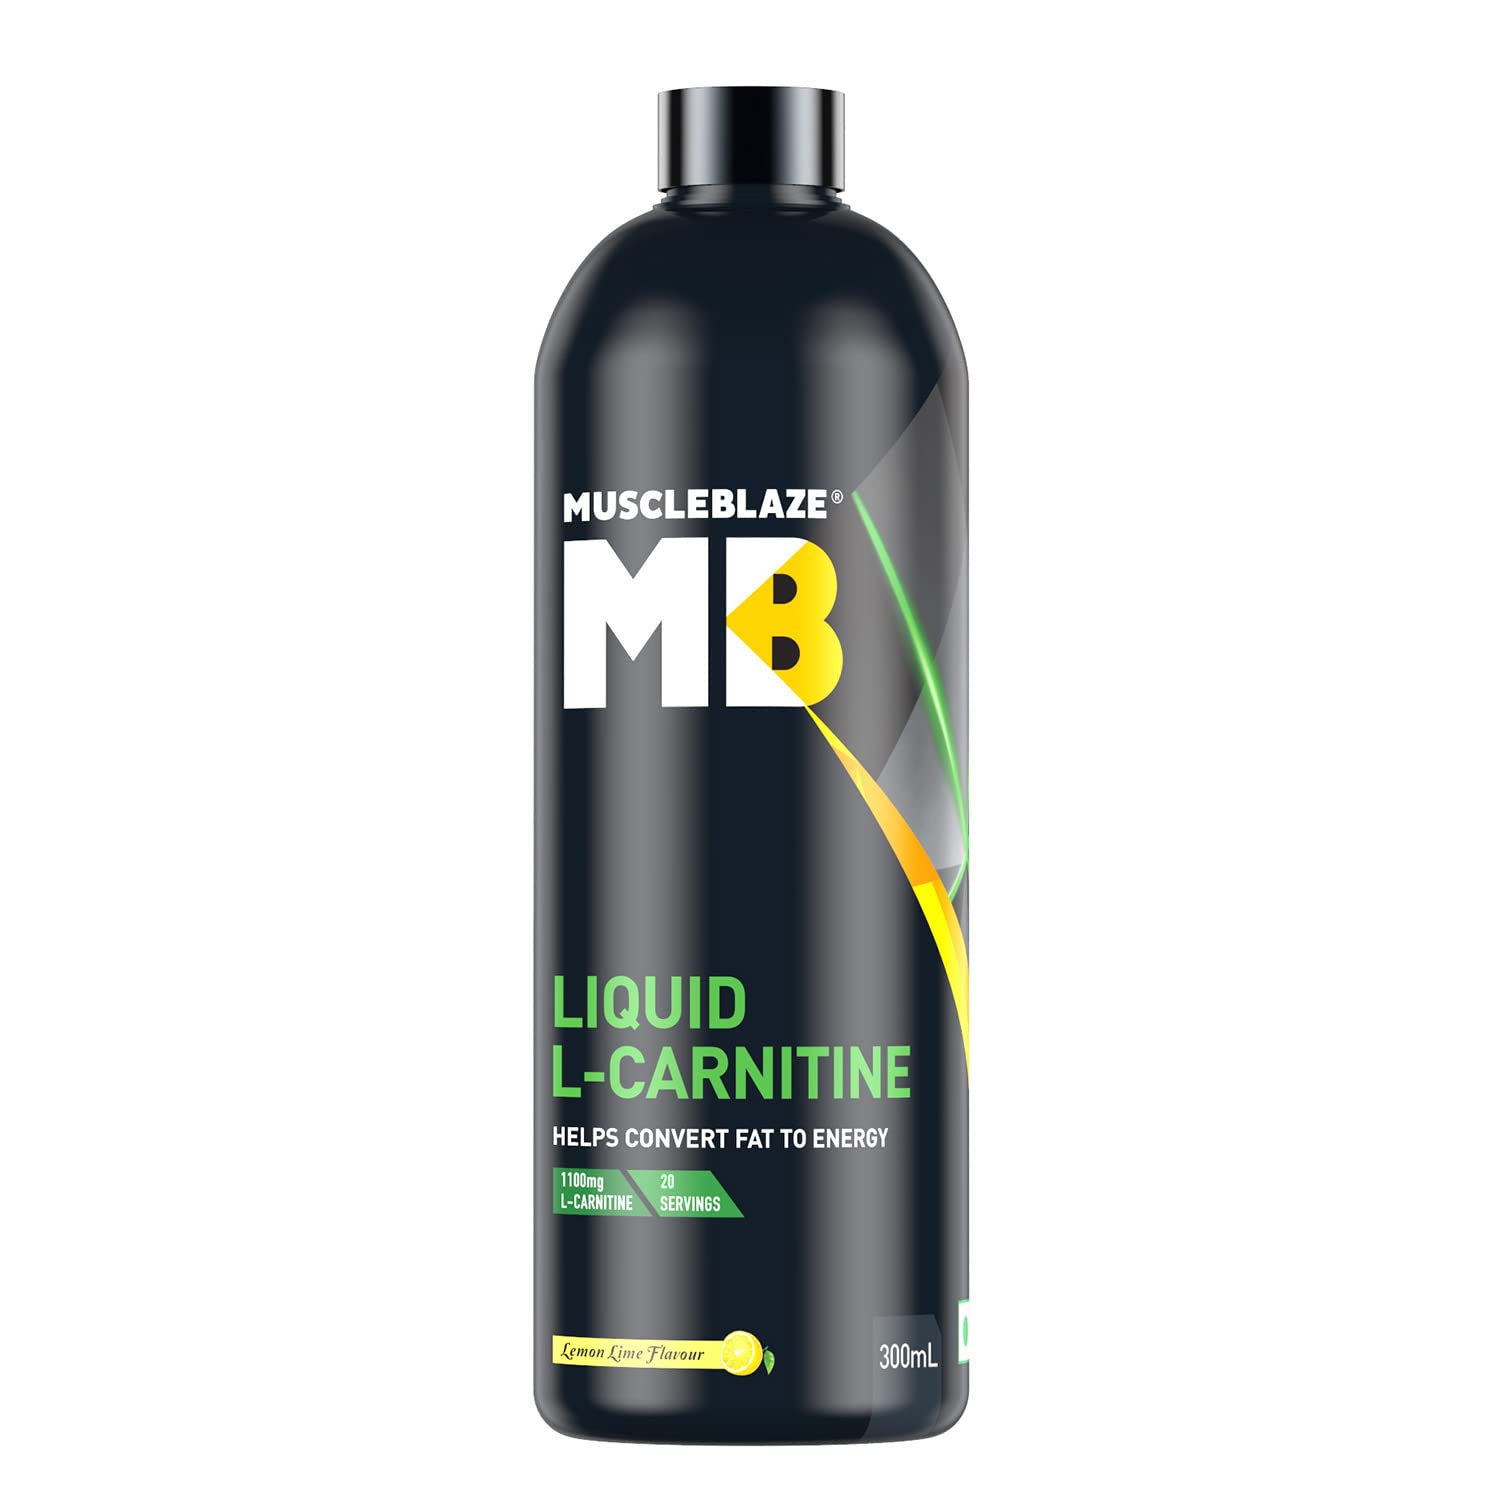 MuscleBlaze Liquid L-Carnitine 1100 mg Lemon Lime, Pack of 300 ml, 20 Servings